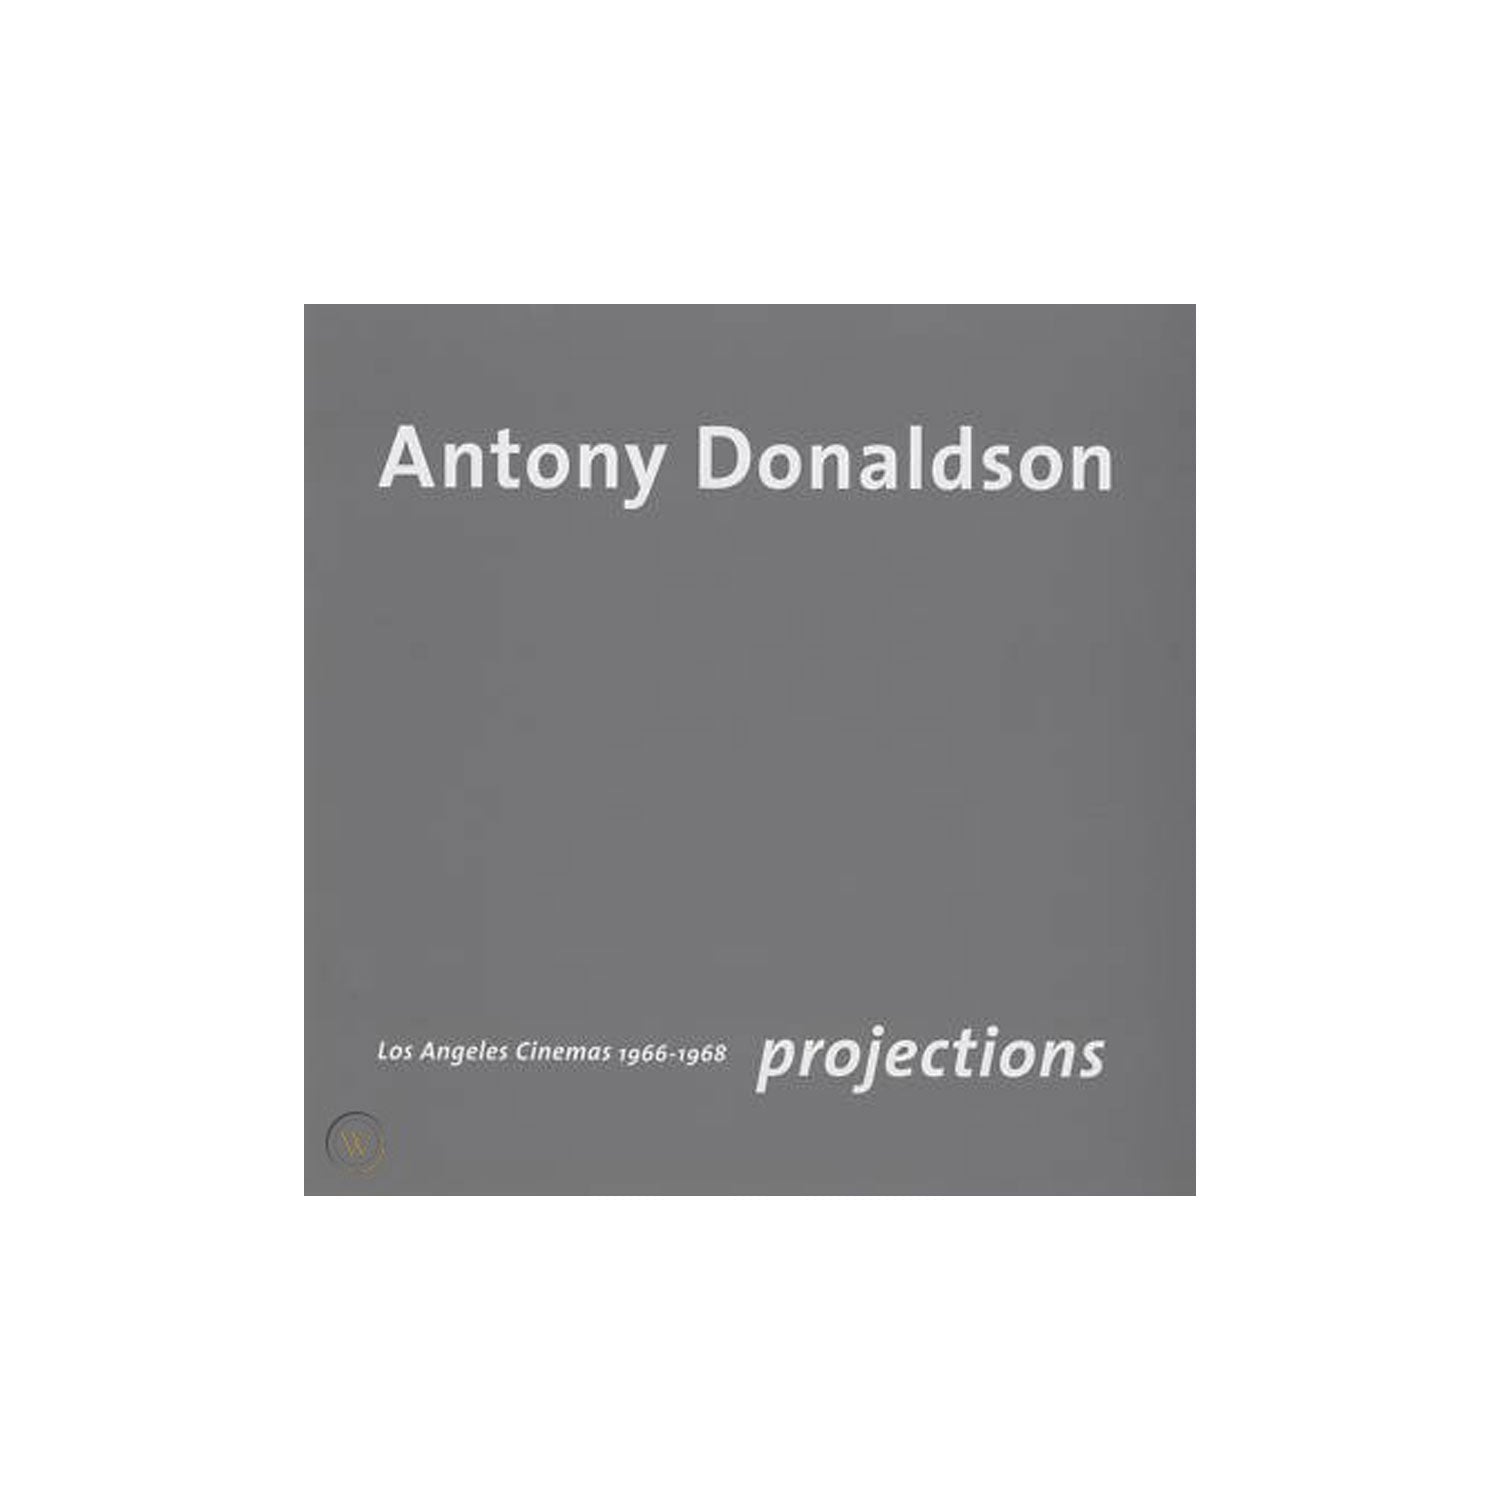 Antony Donaldson: Projections by Antony Donaldson Photo Museum Ireland